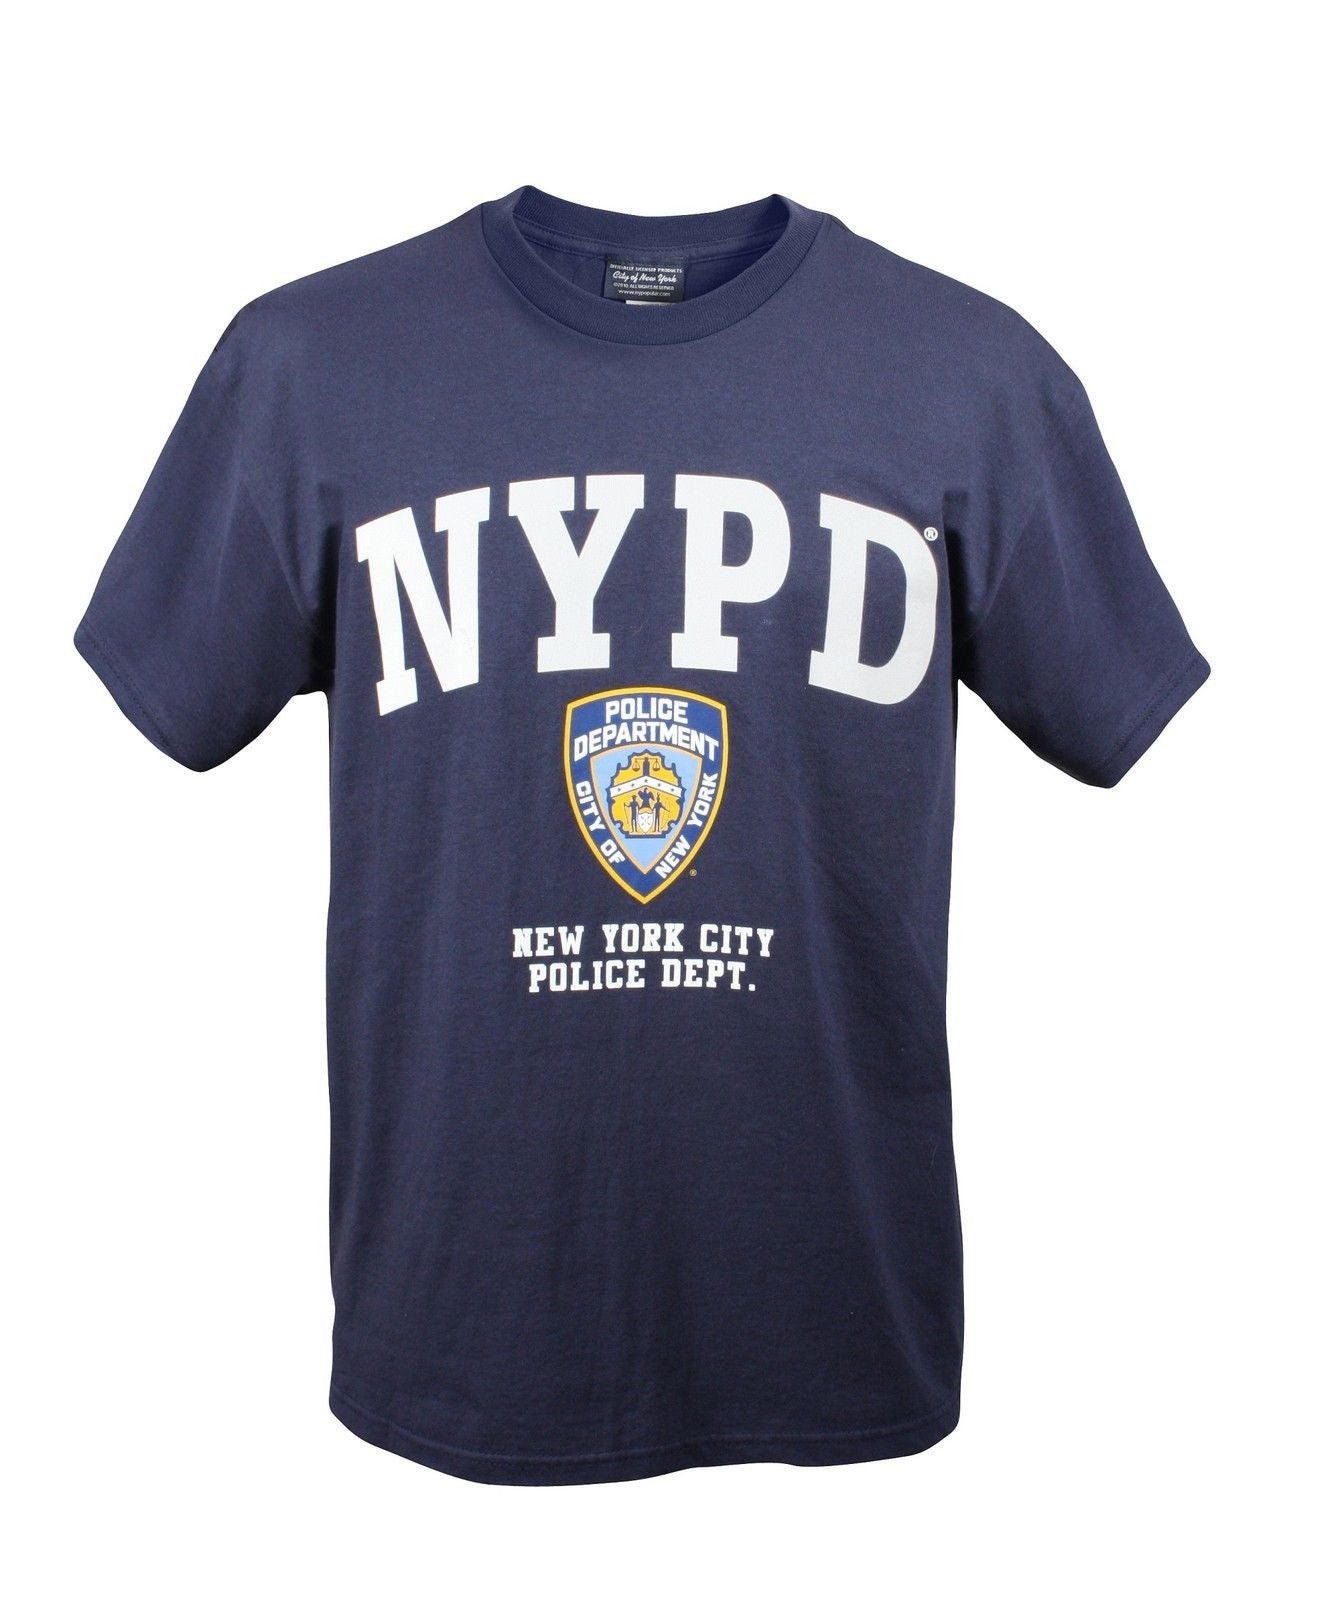 Navy NYPD Print